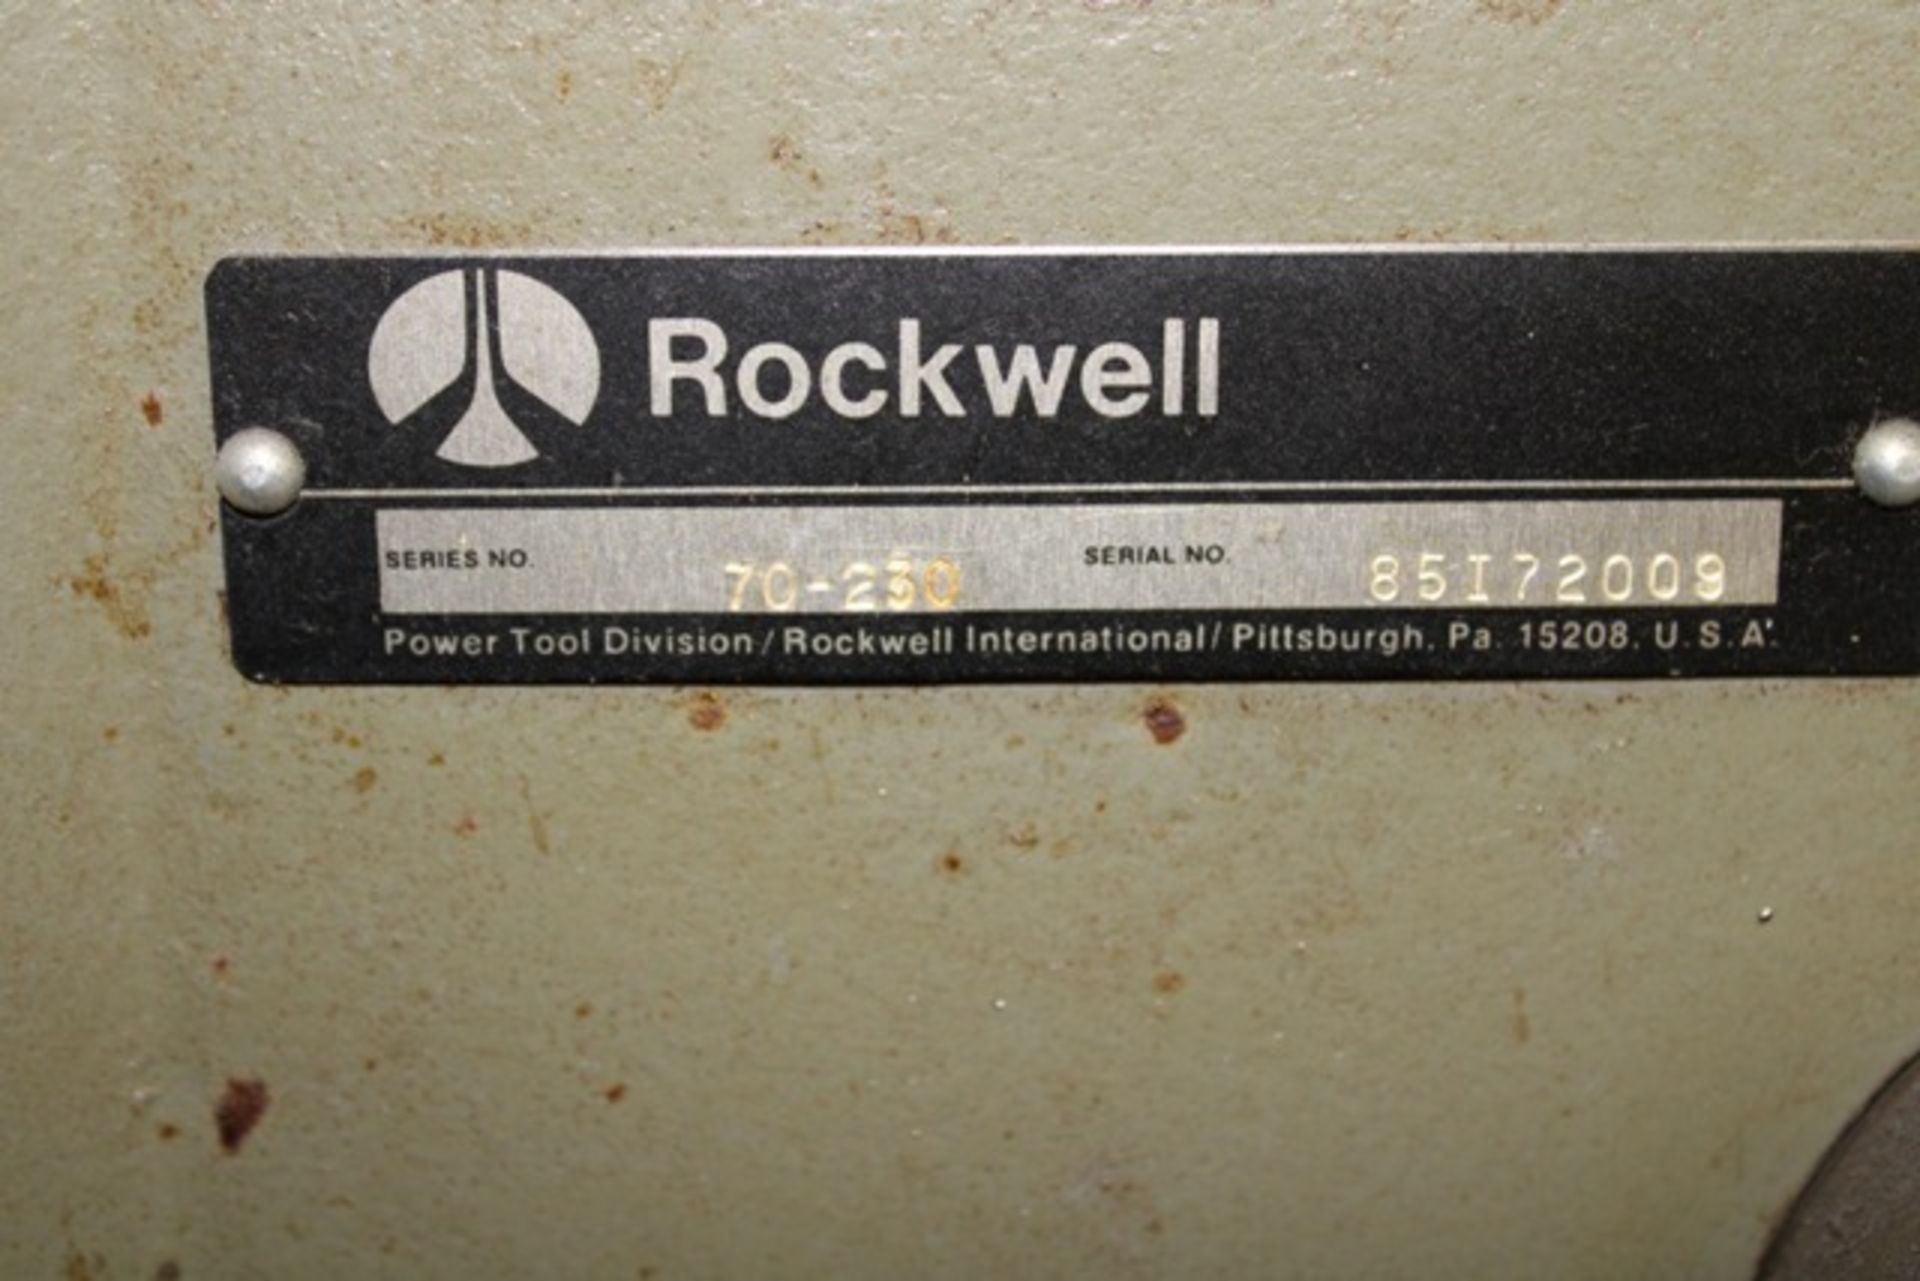 Rockwell Model 70-230 Pedestal Drill Press - Image 2 of 2